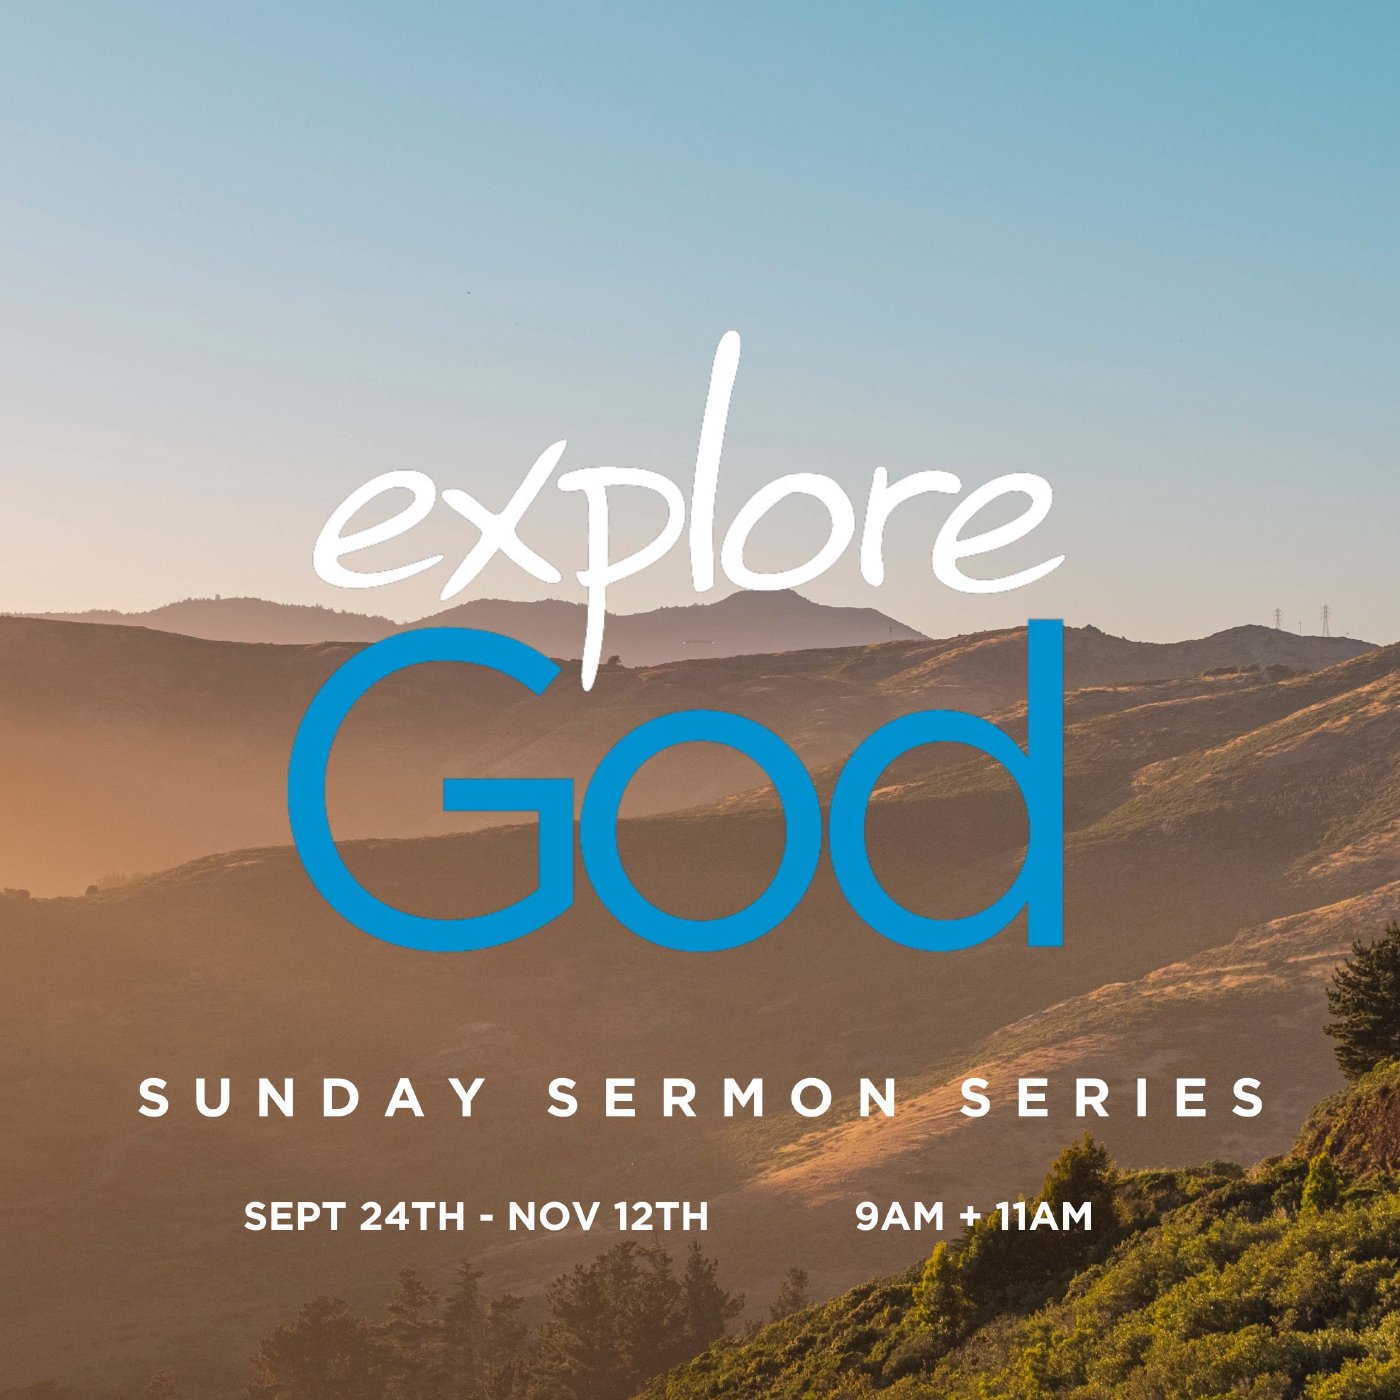 Explore God: Week 4 - Why Does Christianity Seem so Narrow?